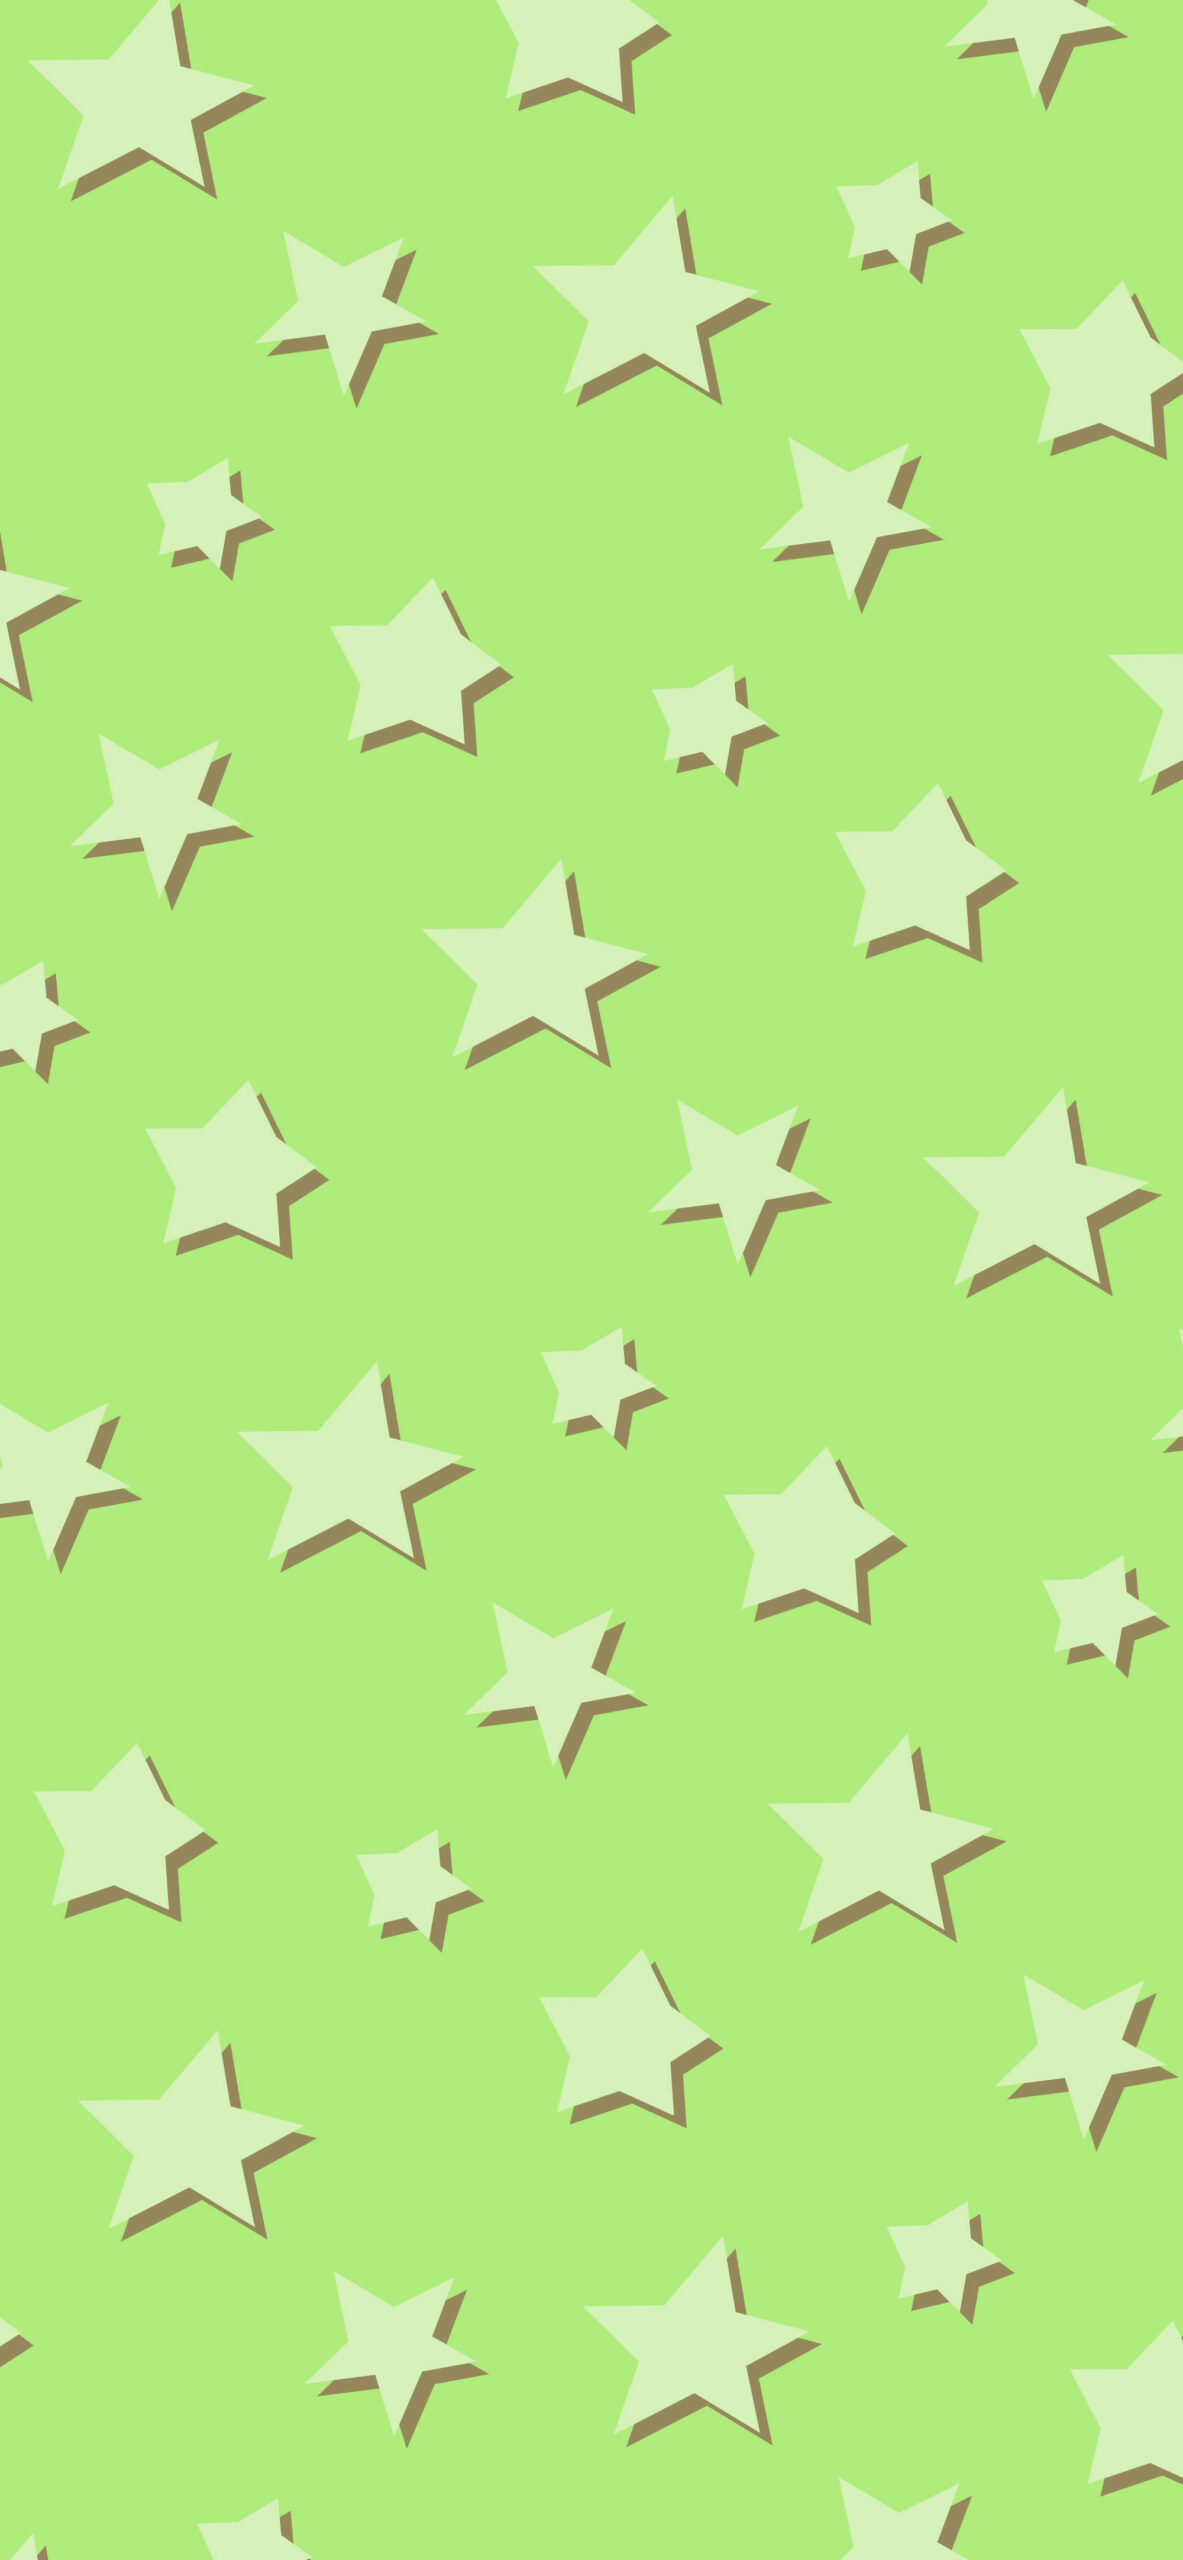 stars pattern green background